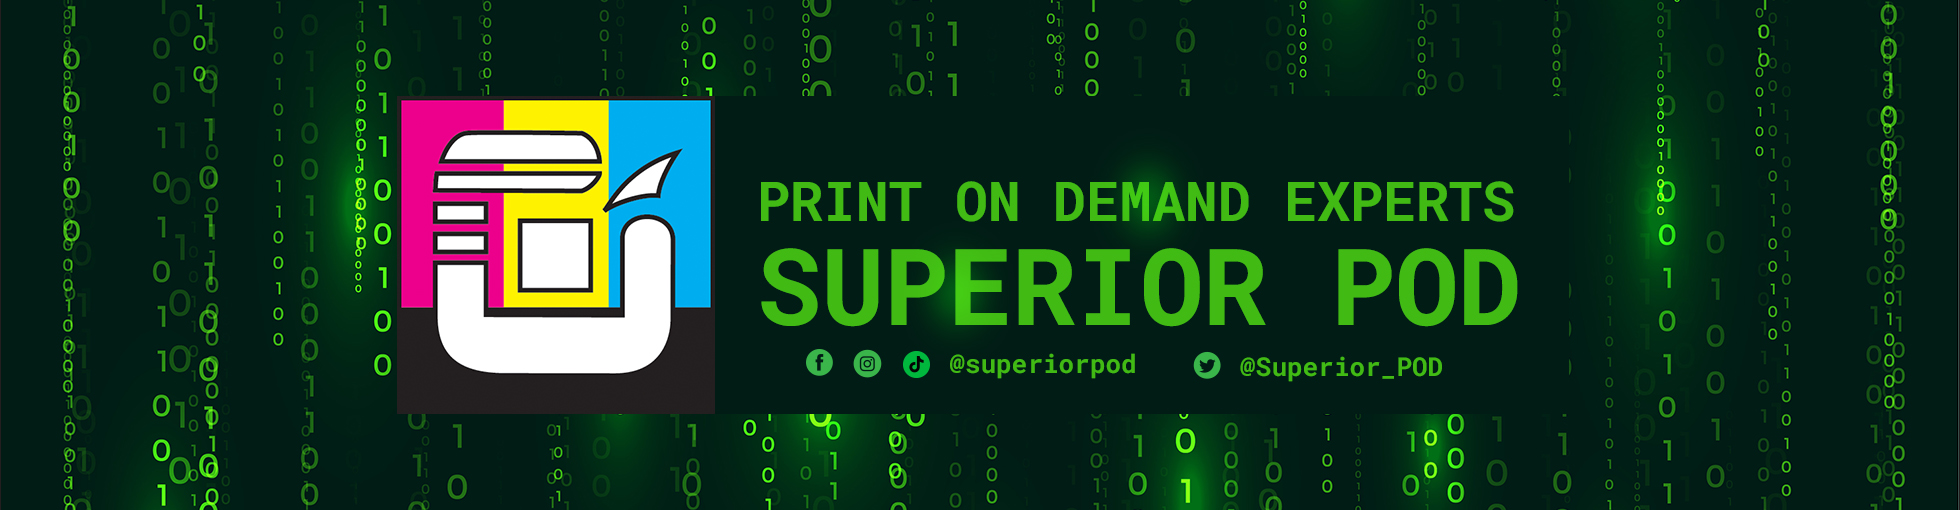 Superior POD Print on Demand Experts